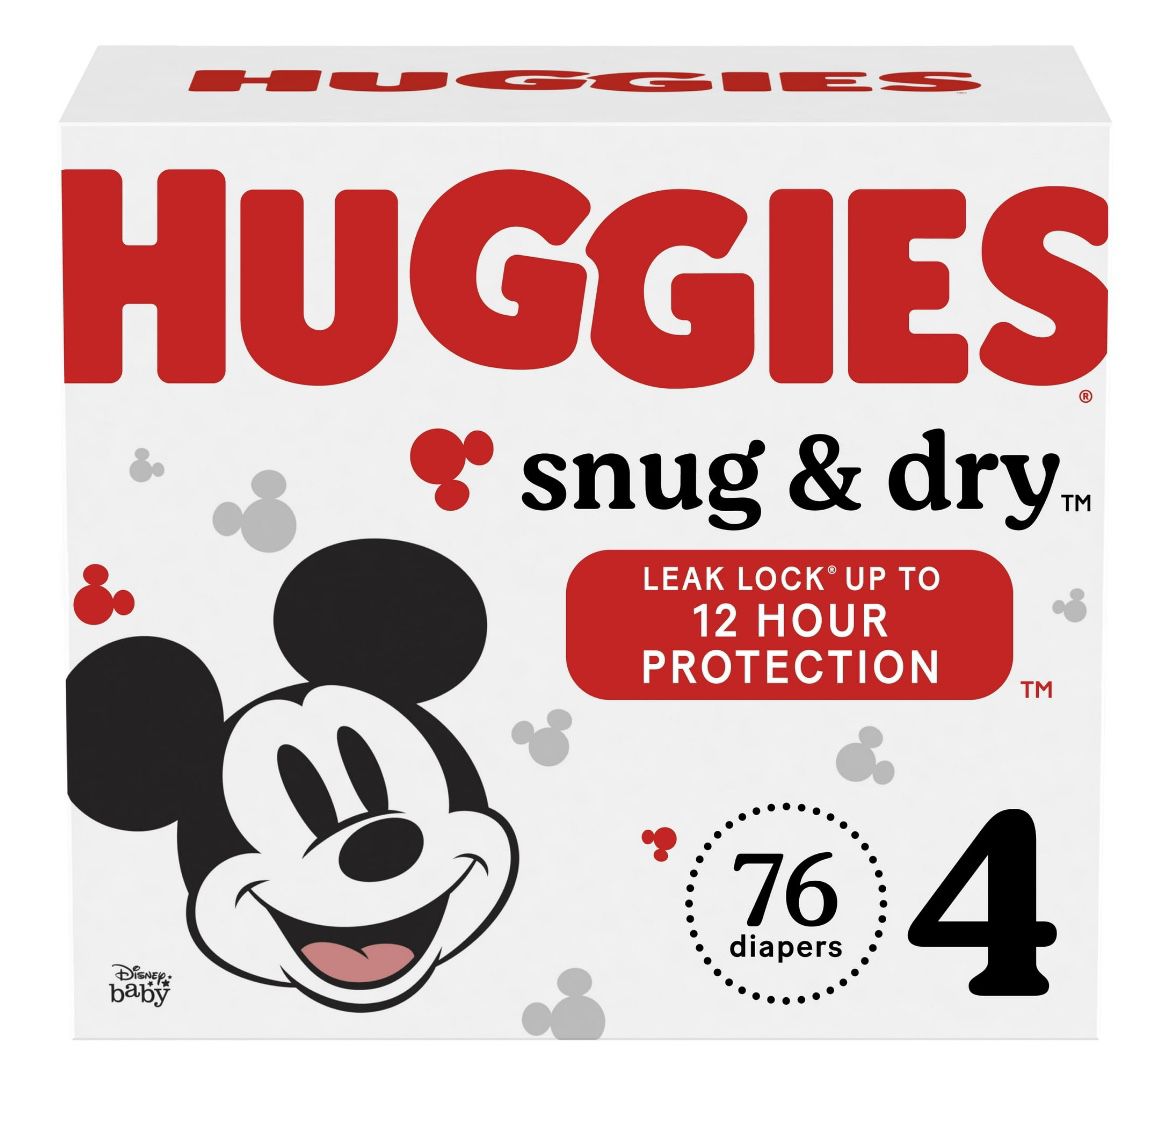 Huggies Snug & Dry box size 4 (76 ct)